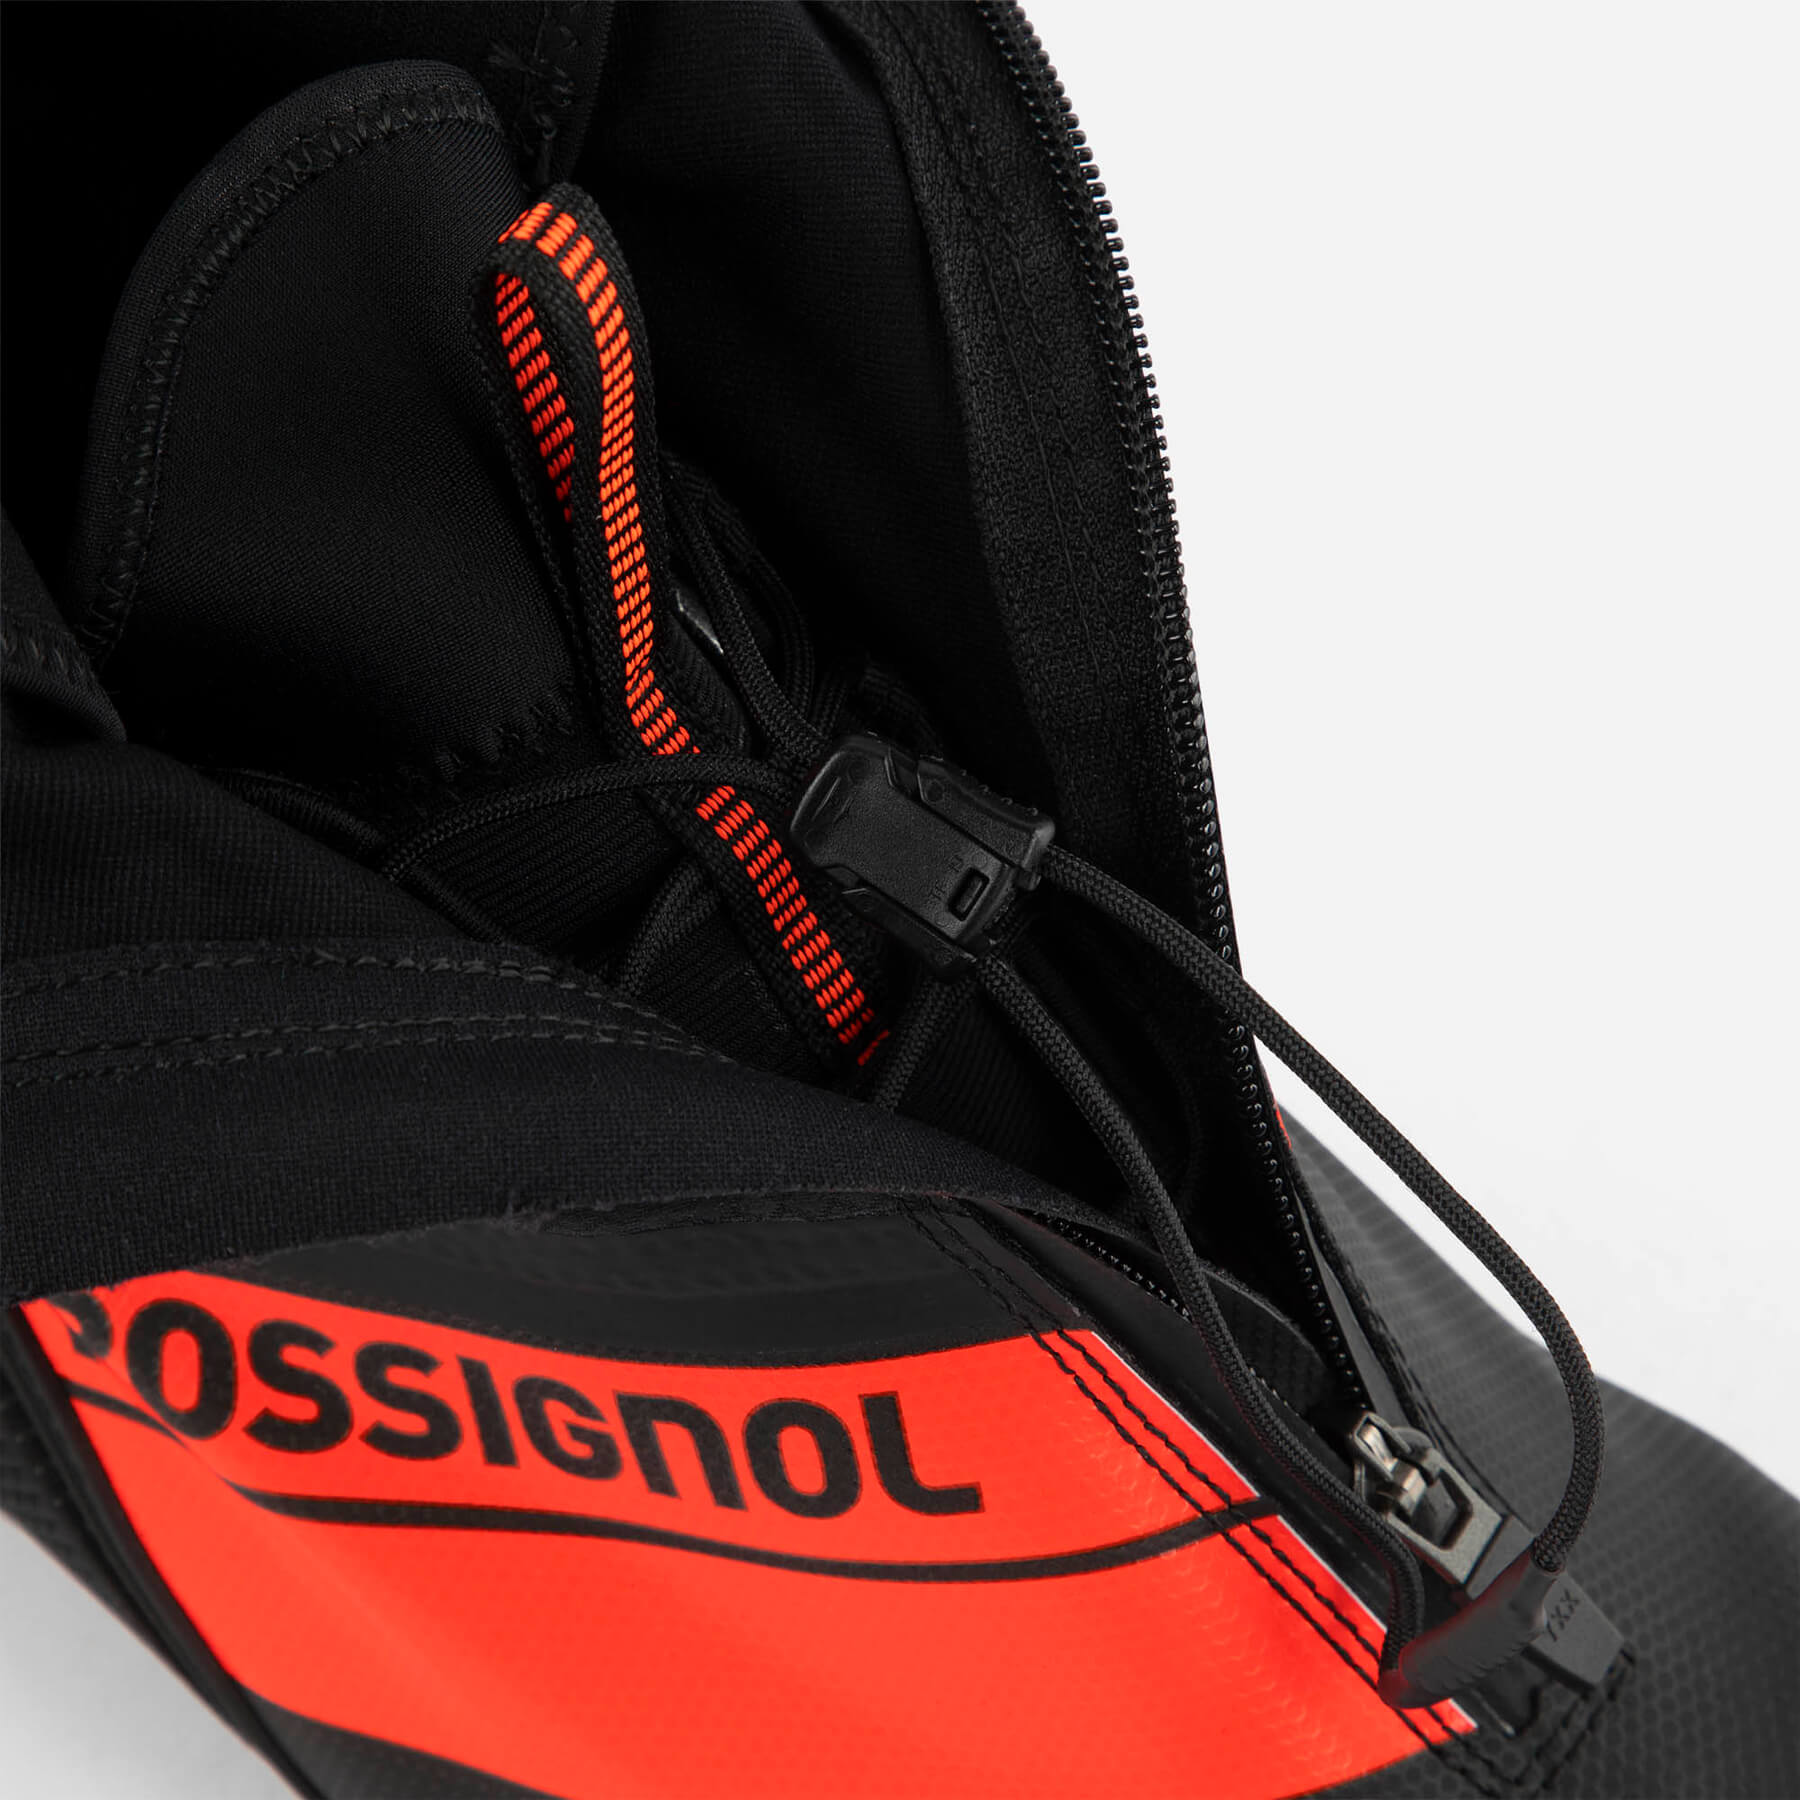 Rossignol X-10 Skate Boot